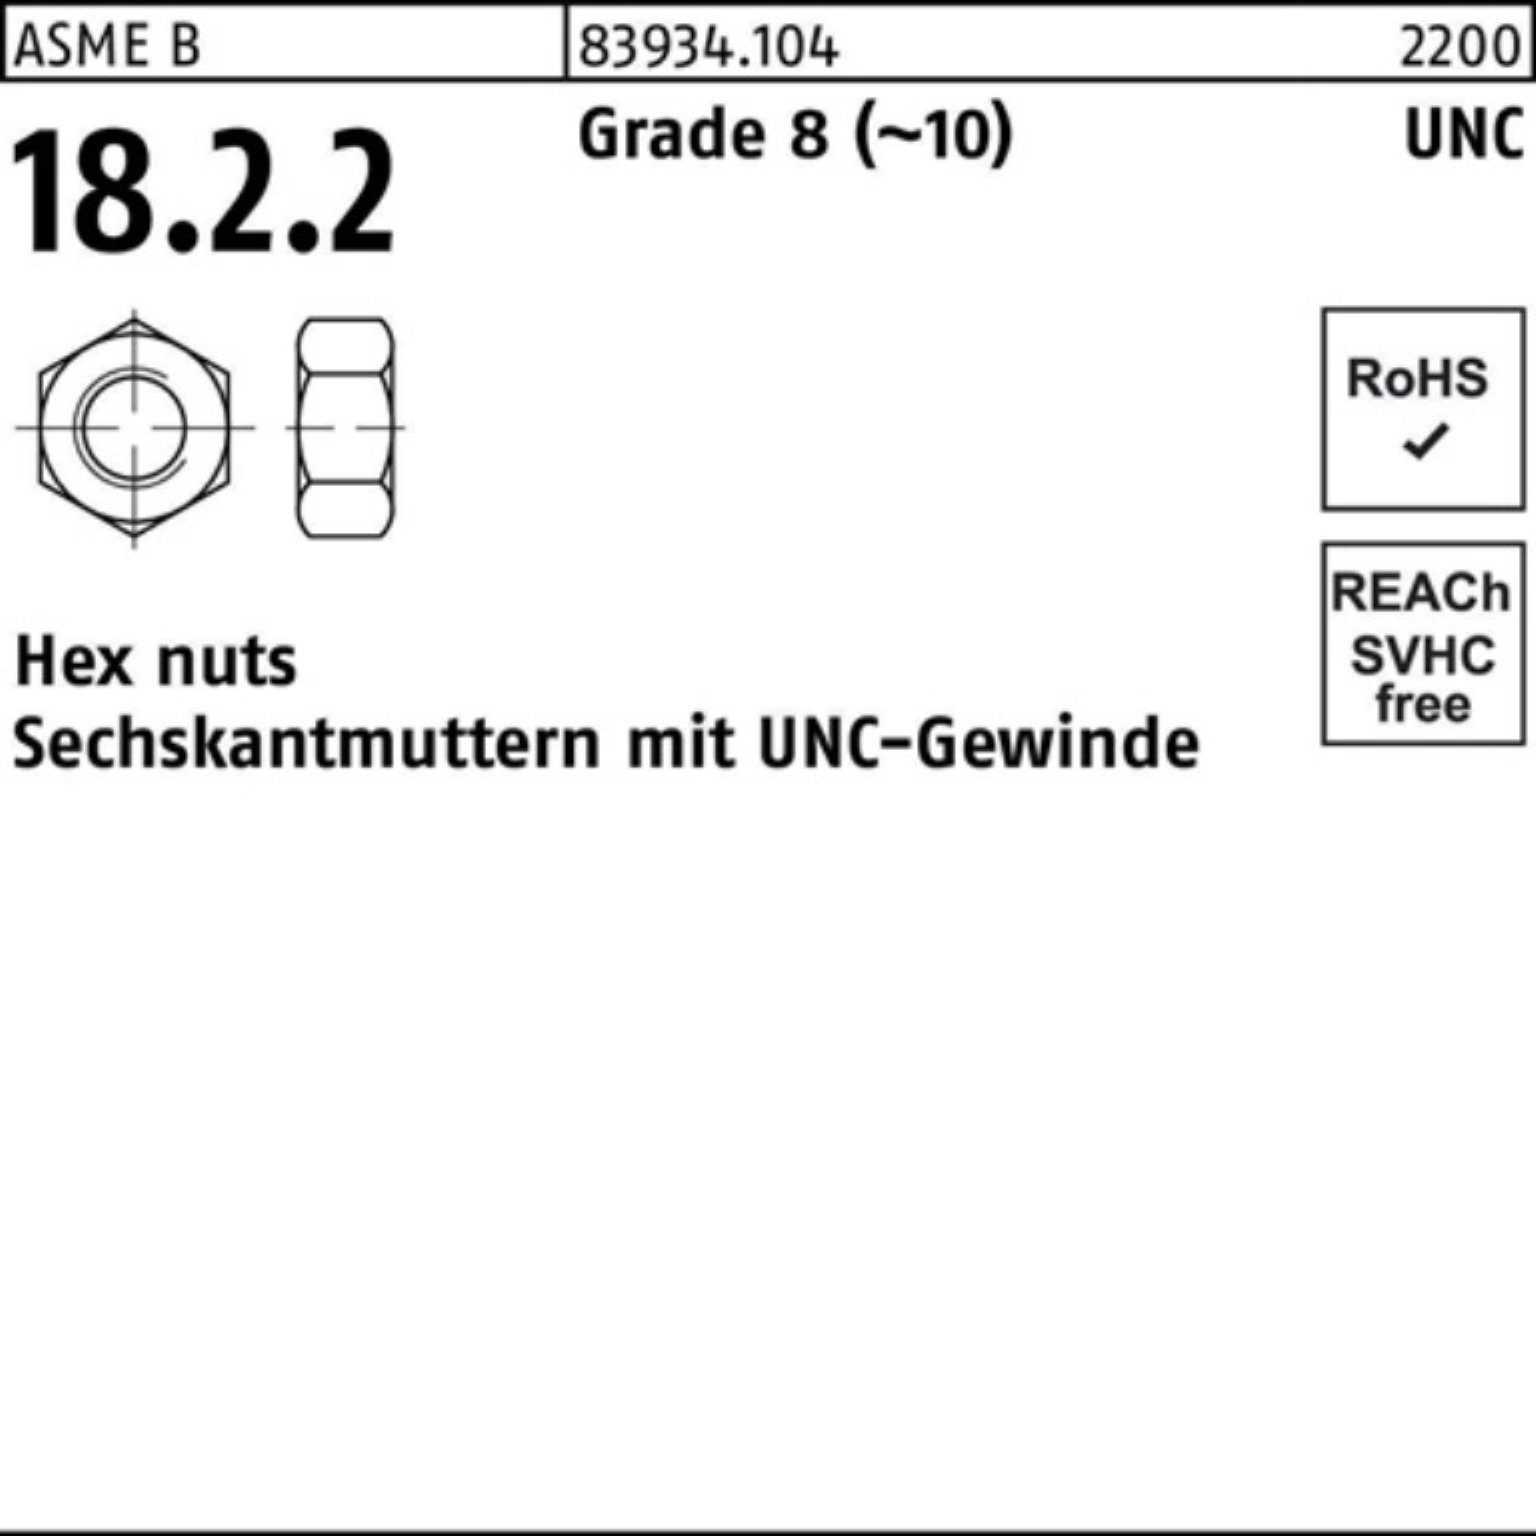 Sechskantmutter UNC-Gewinde Muttern Reyher (10) R 1/8 Pack 83934 10 Grade 8 1 100er